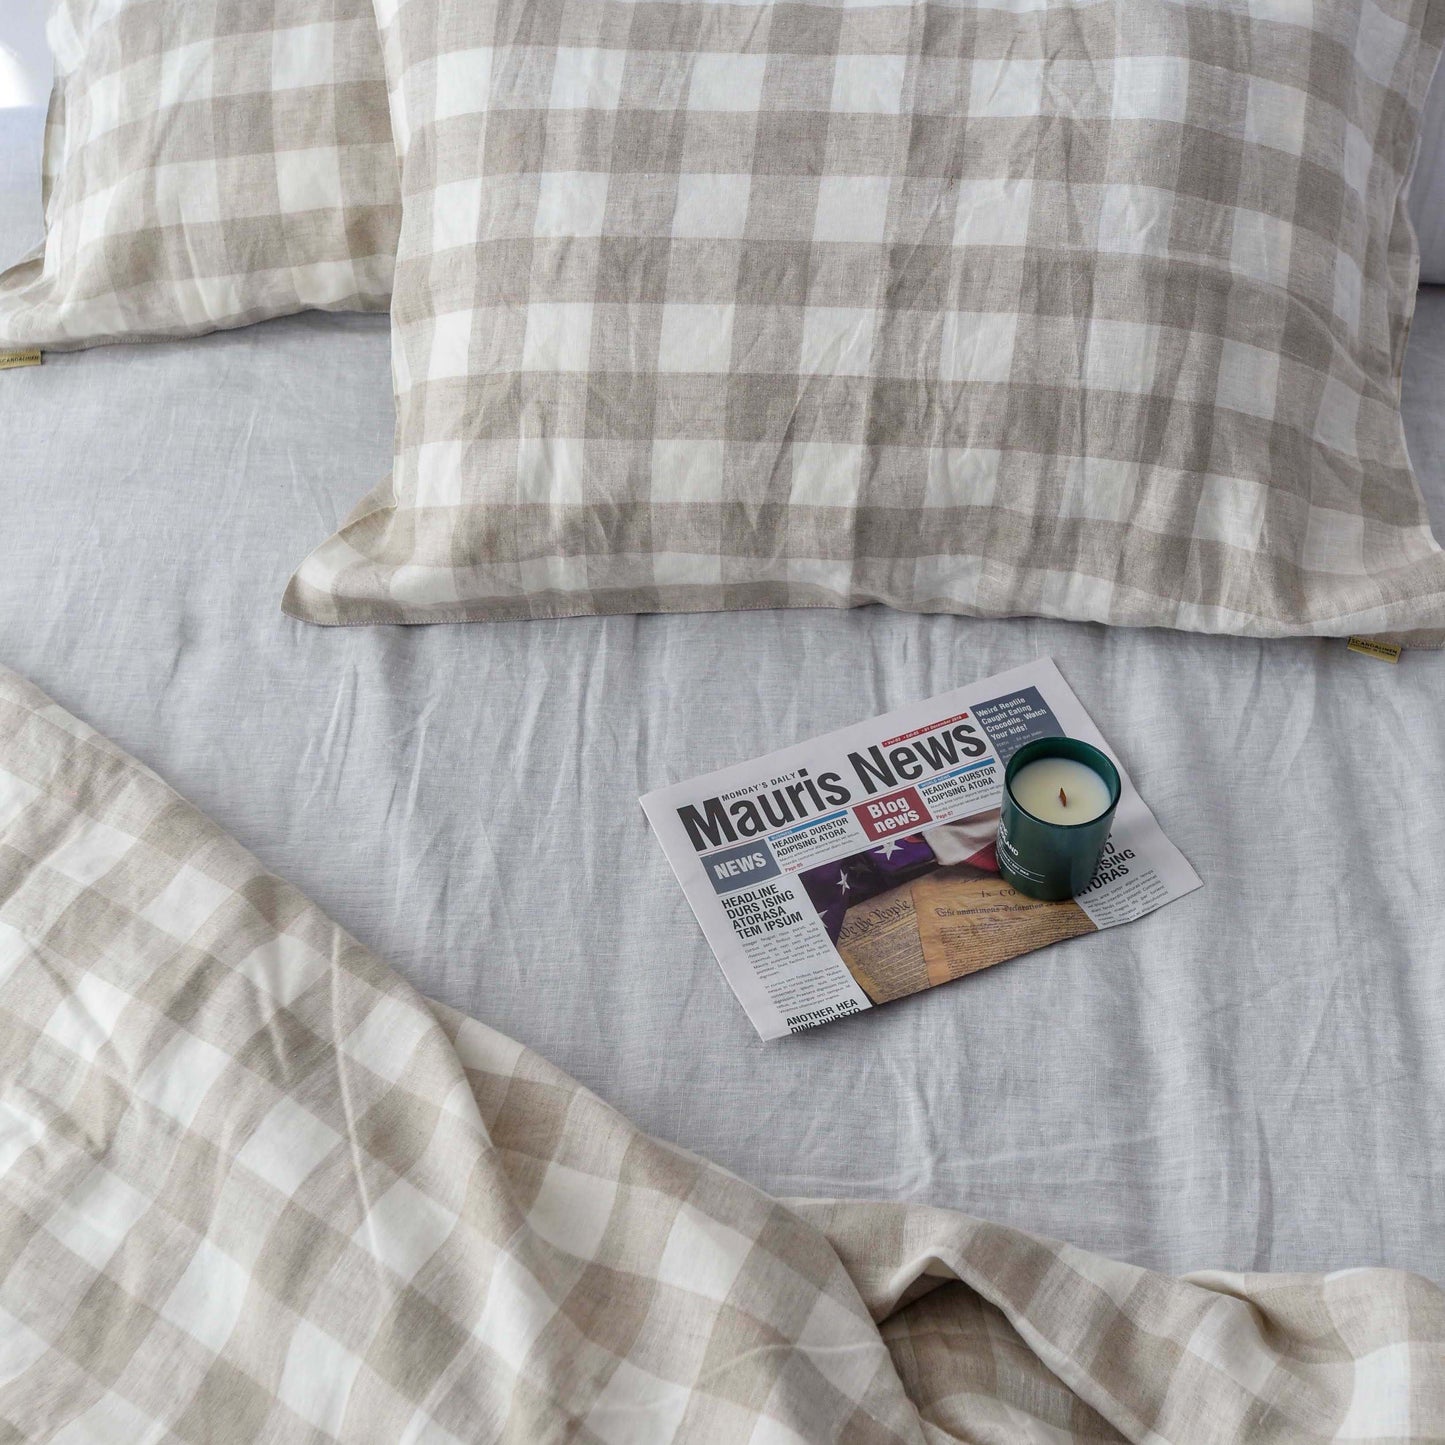 Grid French Linen Duvet Cover+2 Pillowcases Set - Yarn Dyeing 58